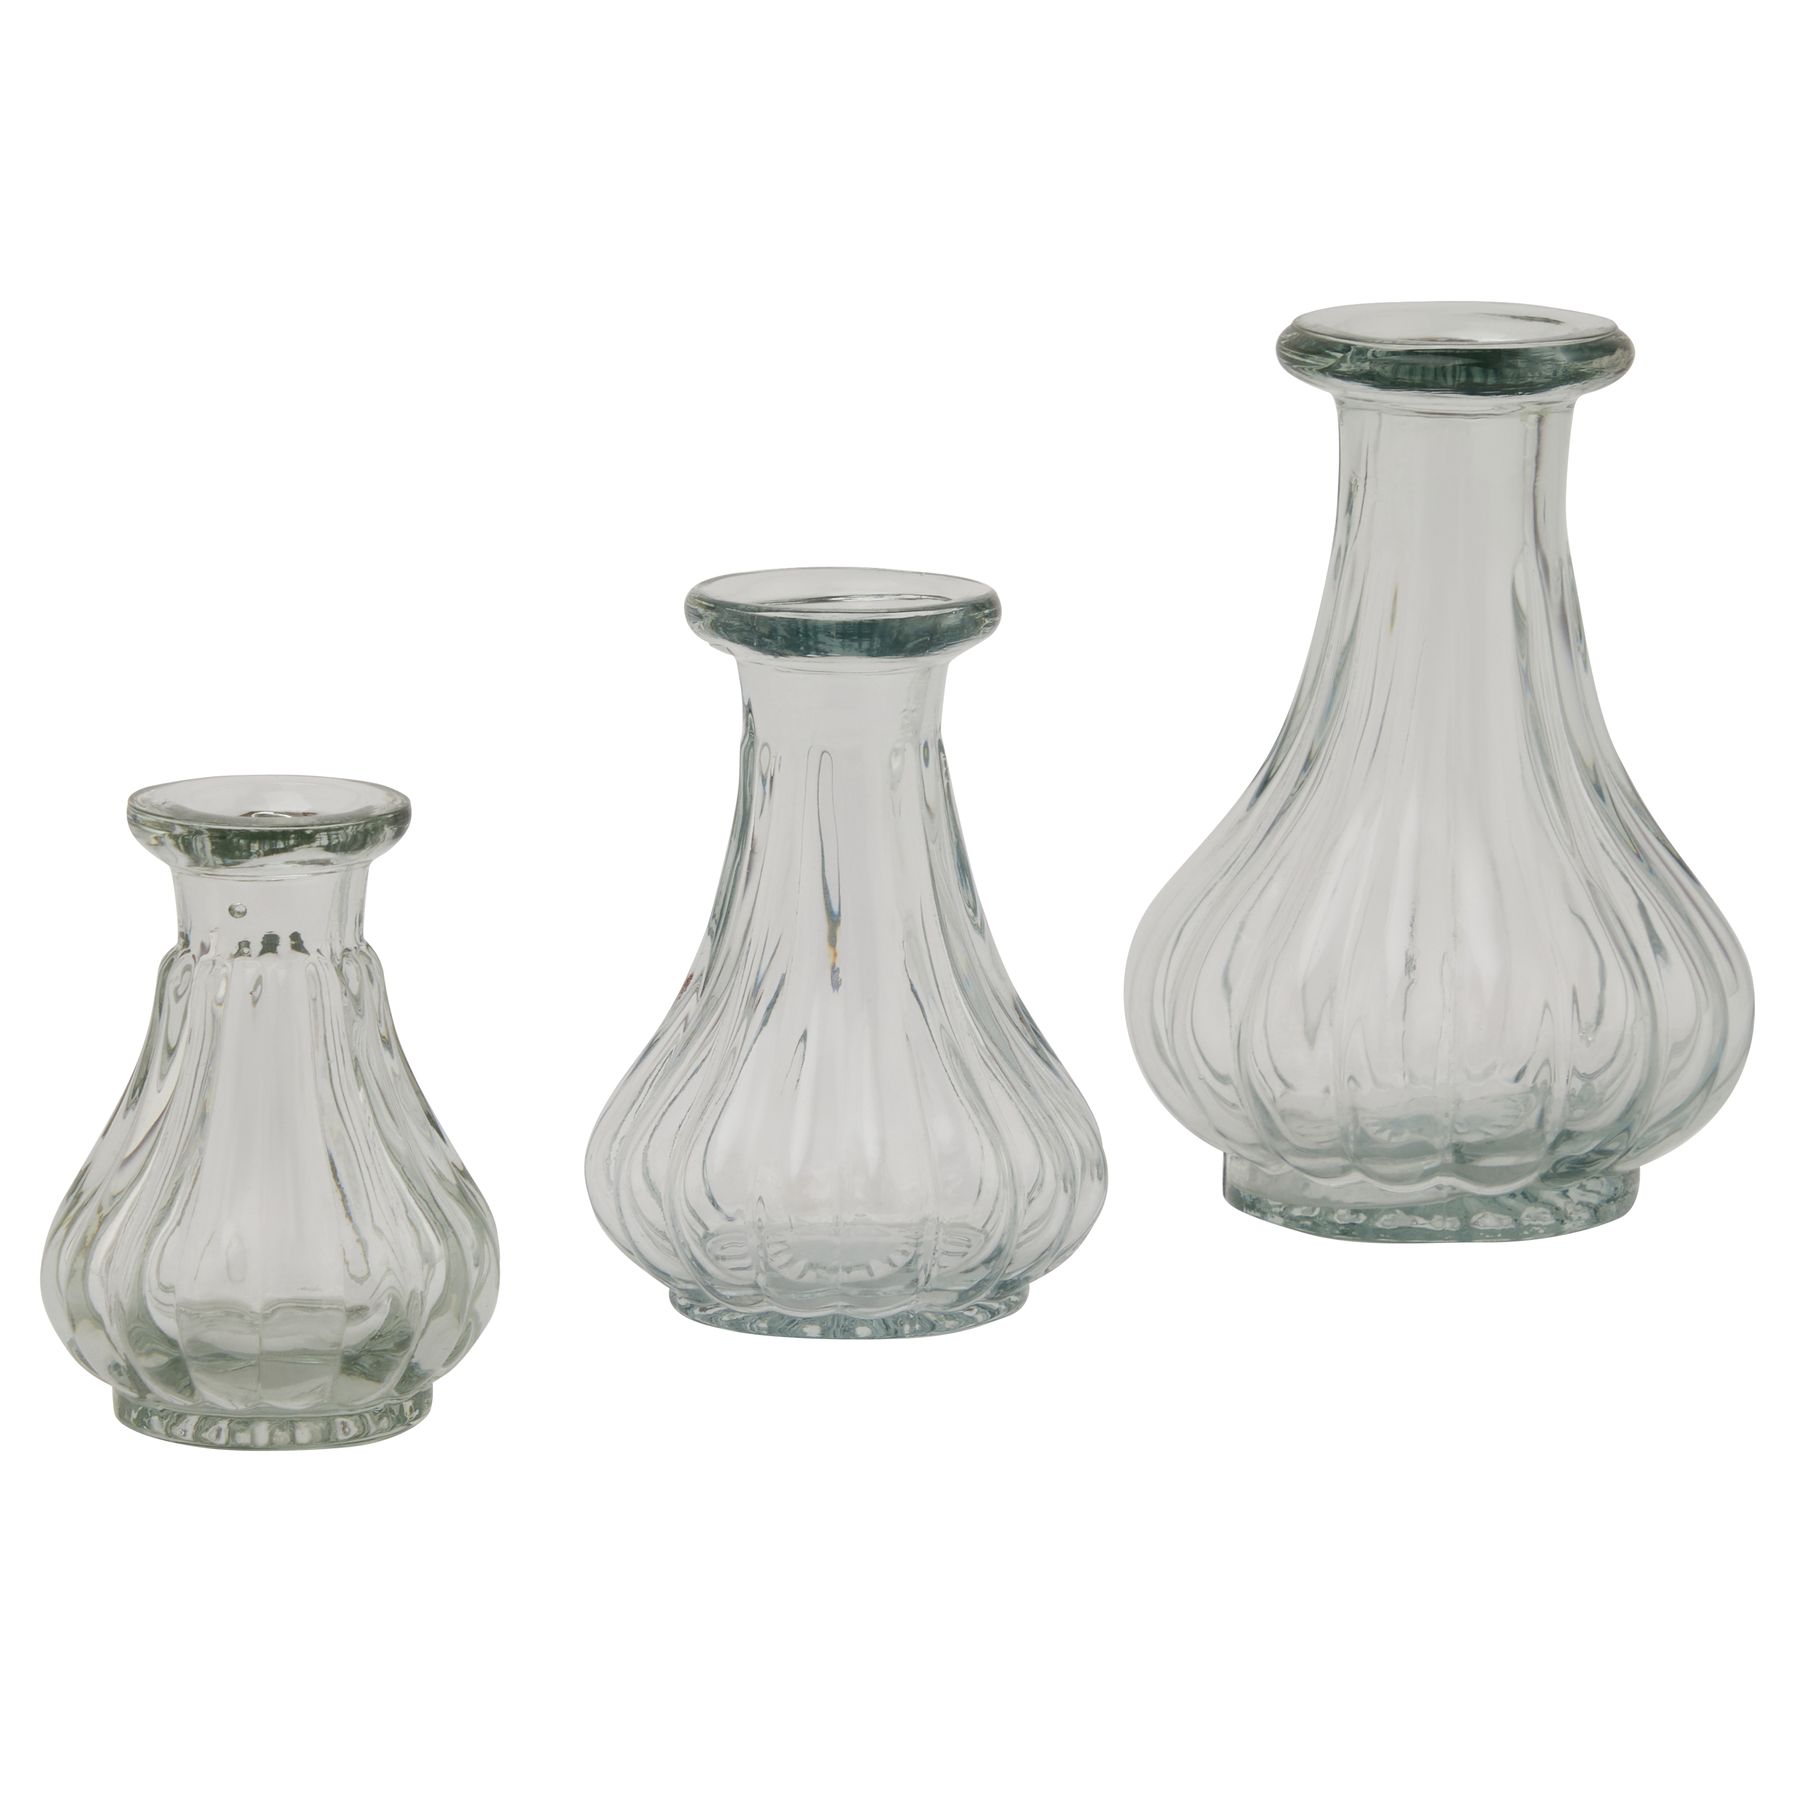 Batura Bud Vase Small - Image 3